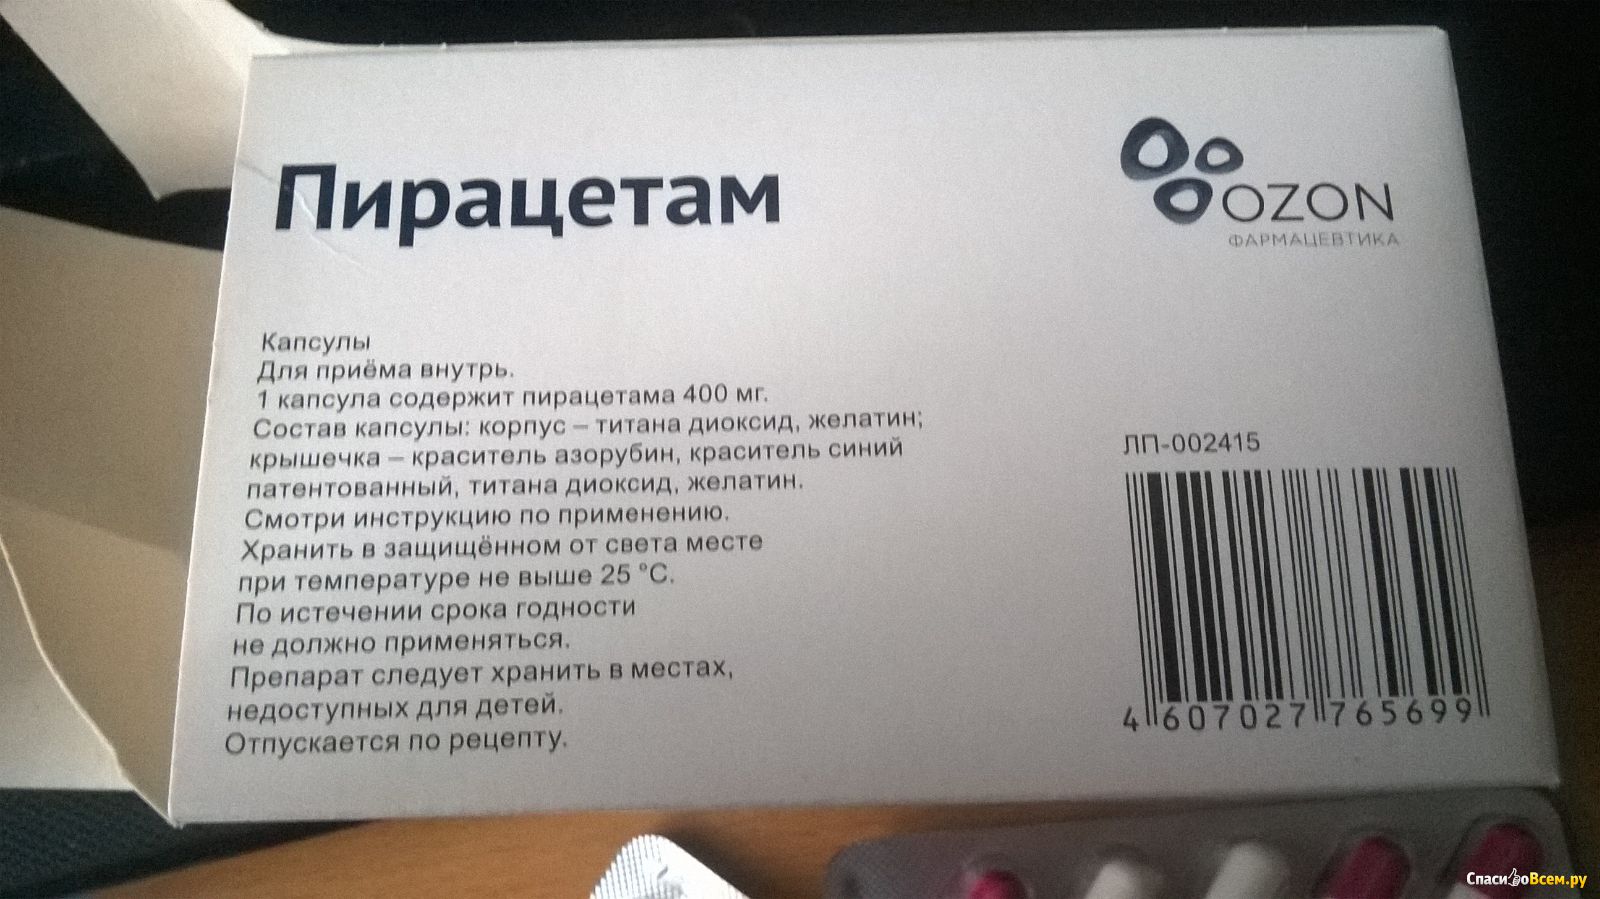 Пирацетам Таблетки Цена В России